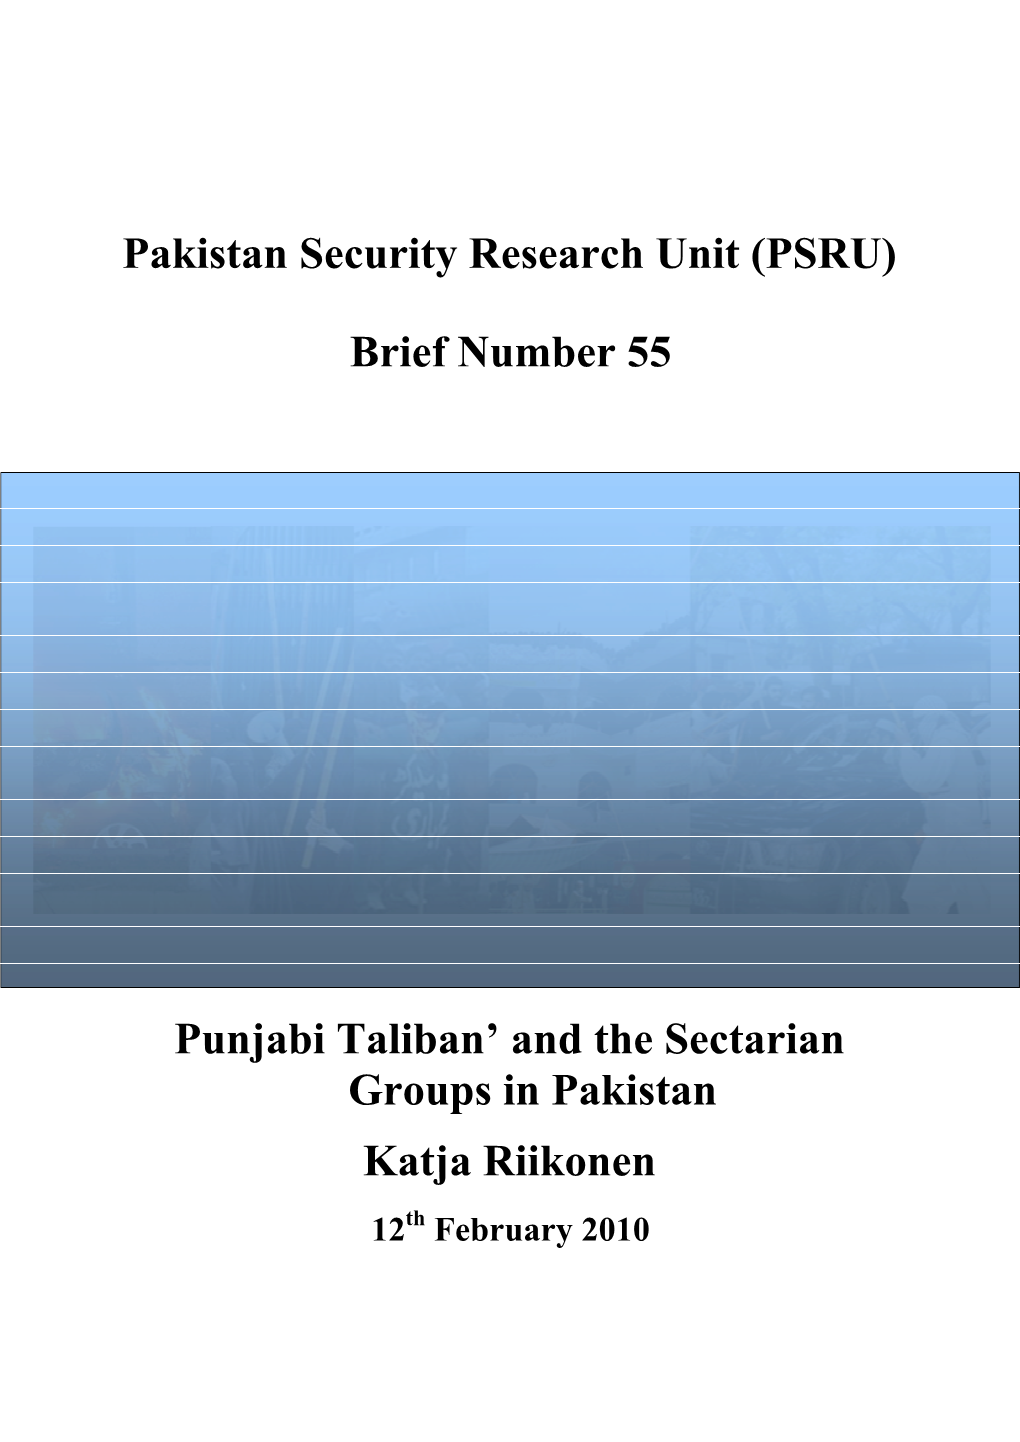 Punjabi Taliban’ and the Sectarian Groups in Pakistan